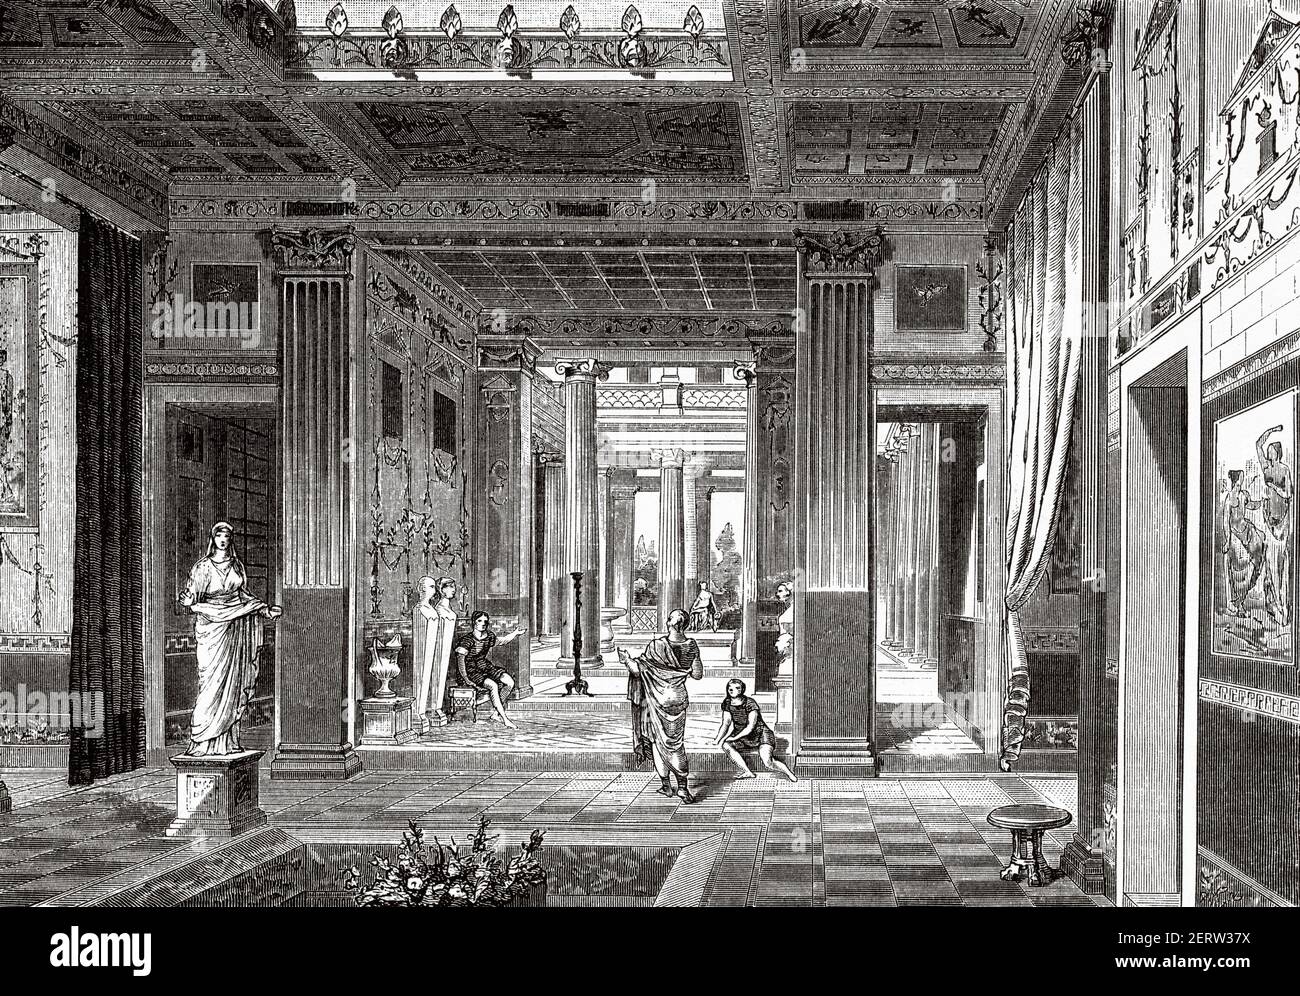 Atrium of a Ancient Rome house, Italy. Europe. Old XIX century engraved illustration, El Mundo Ilustrado 1880 Stock Photo